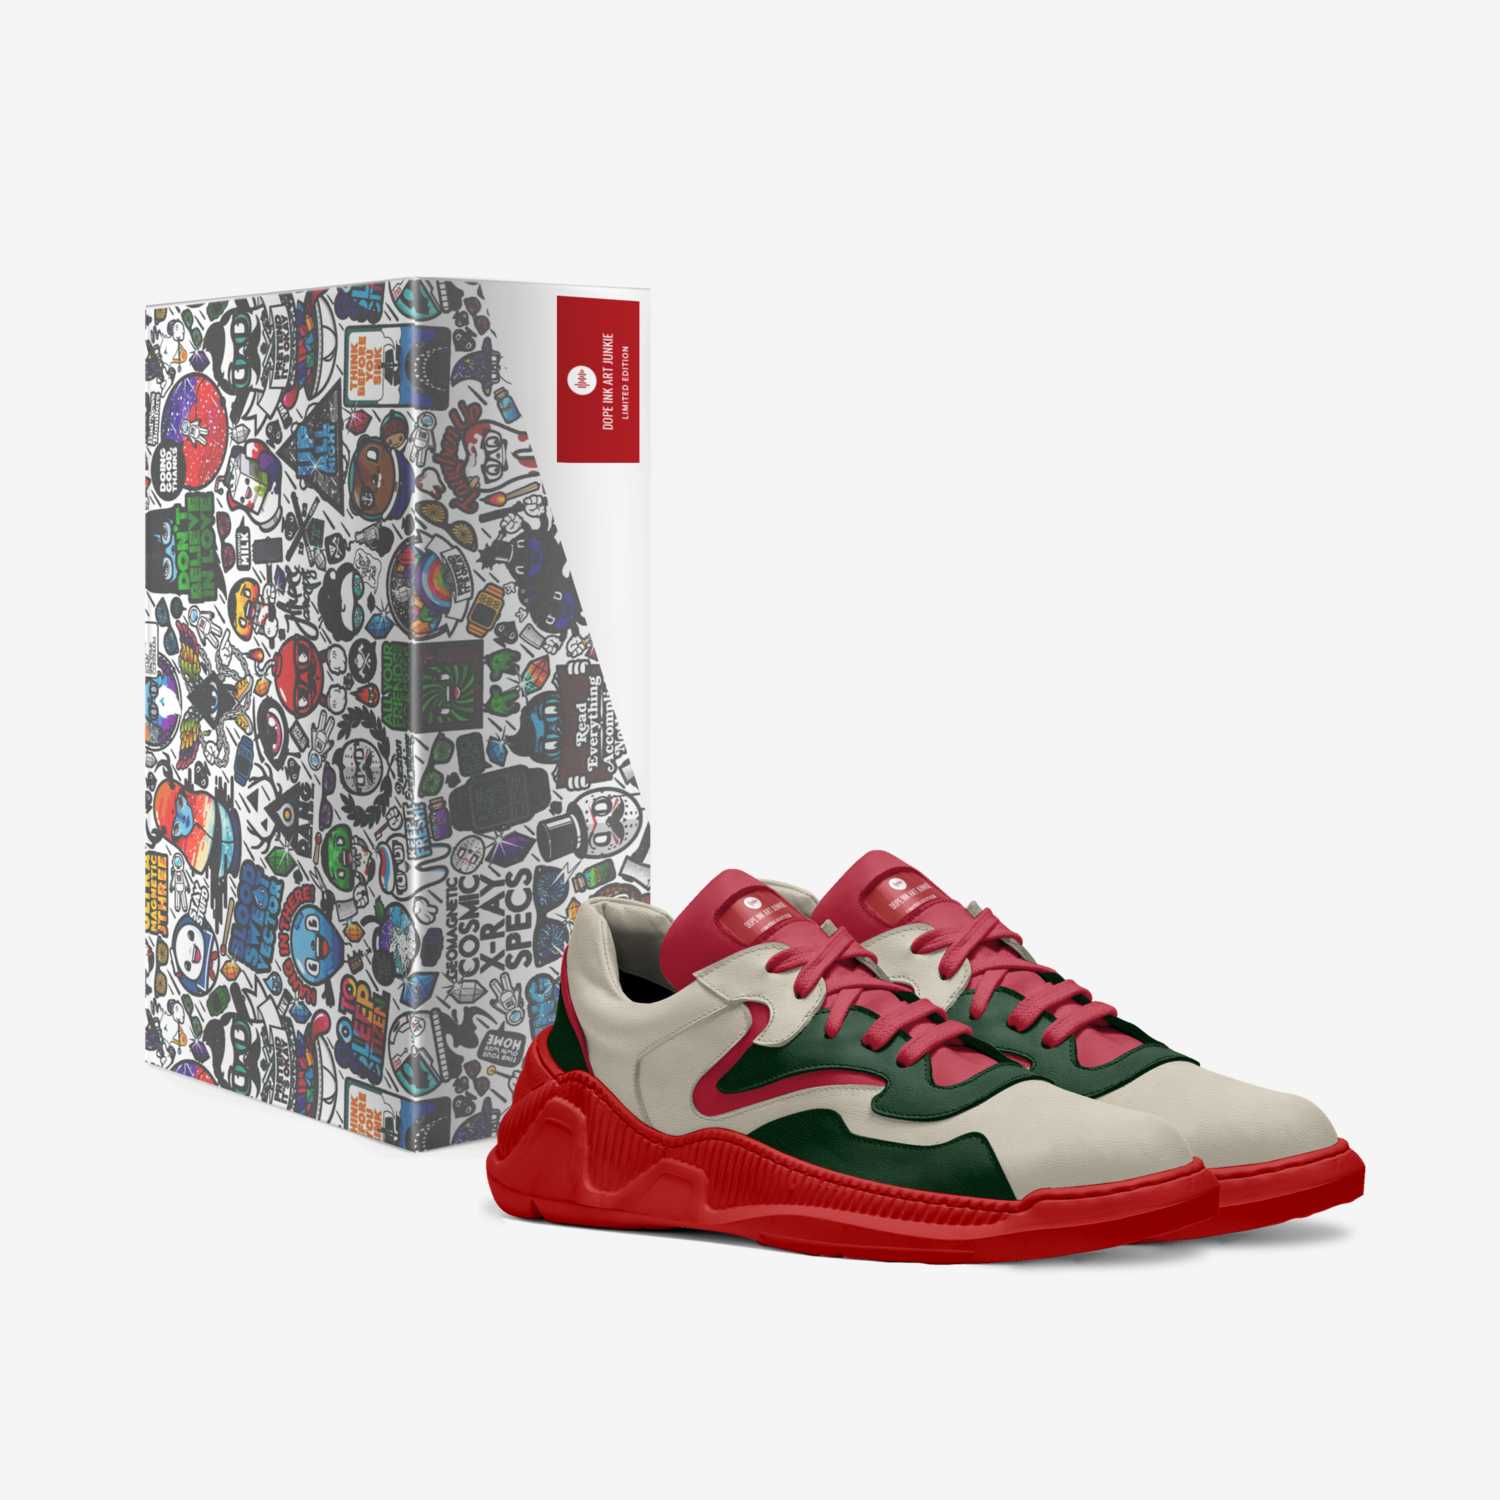 Diaj custom made in Italy shoes by Alexander Lane | Box view